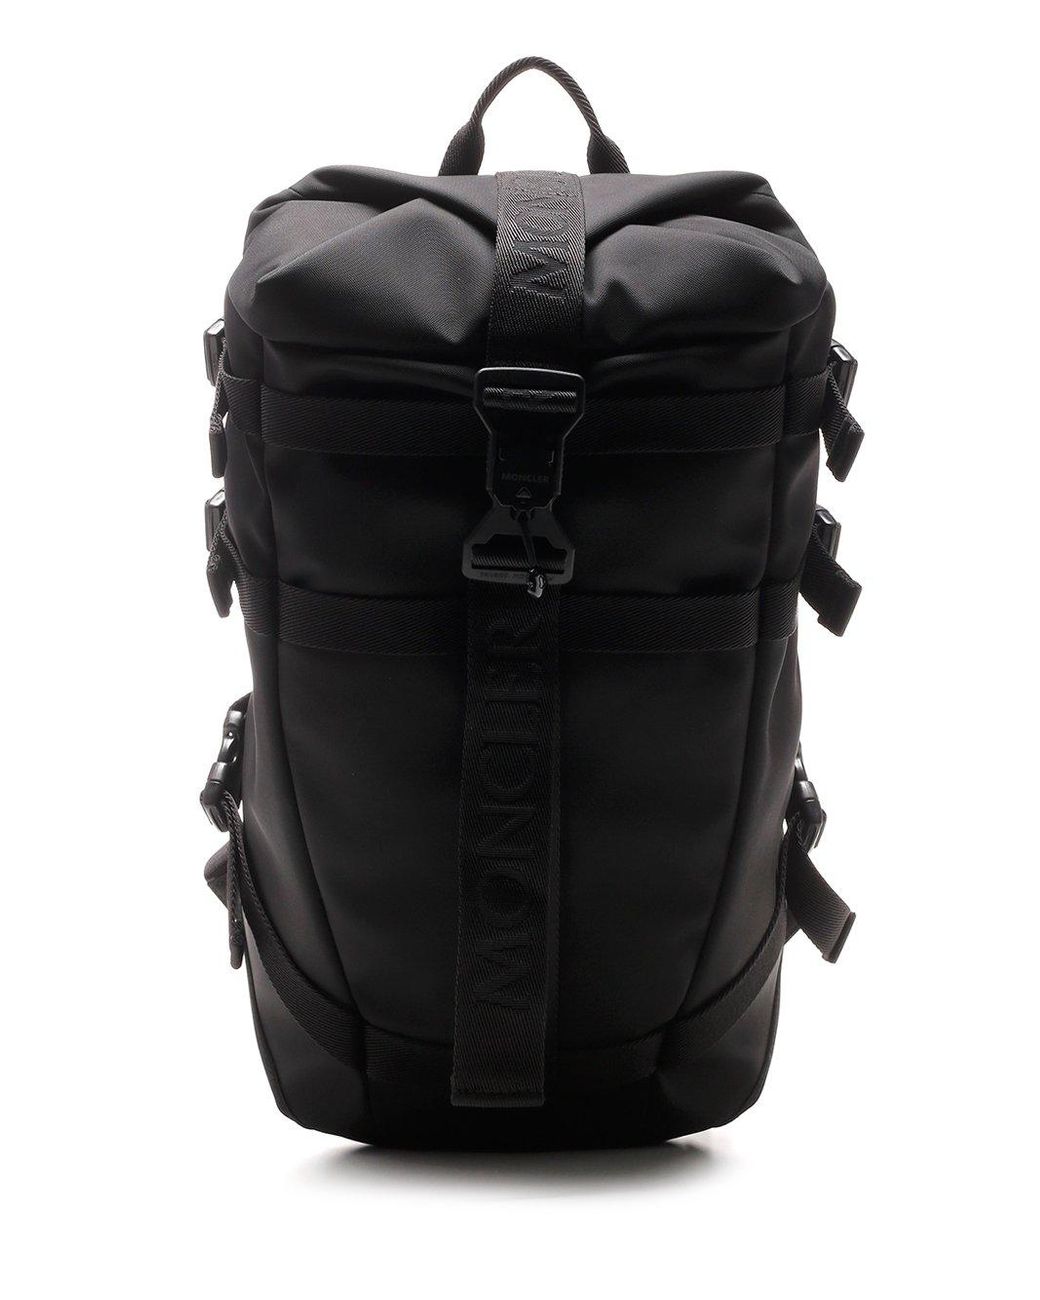 Moncler Synthetic Argens Backpack in Black for Men - Lyst